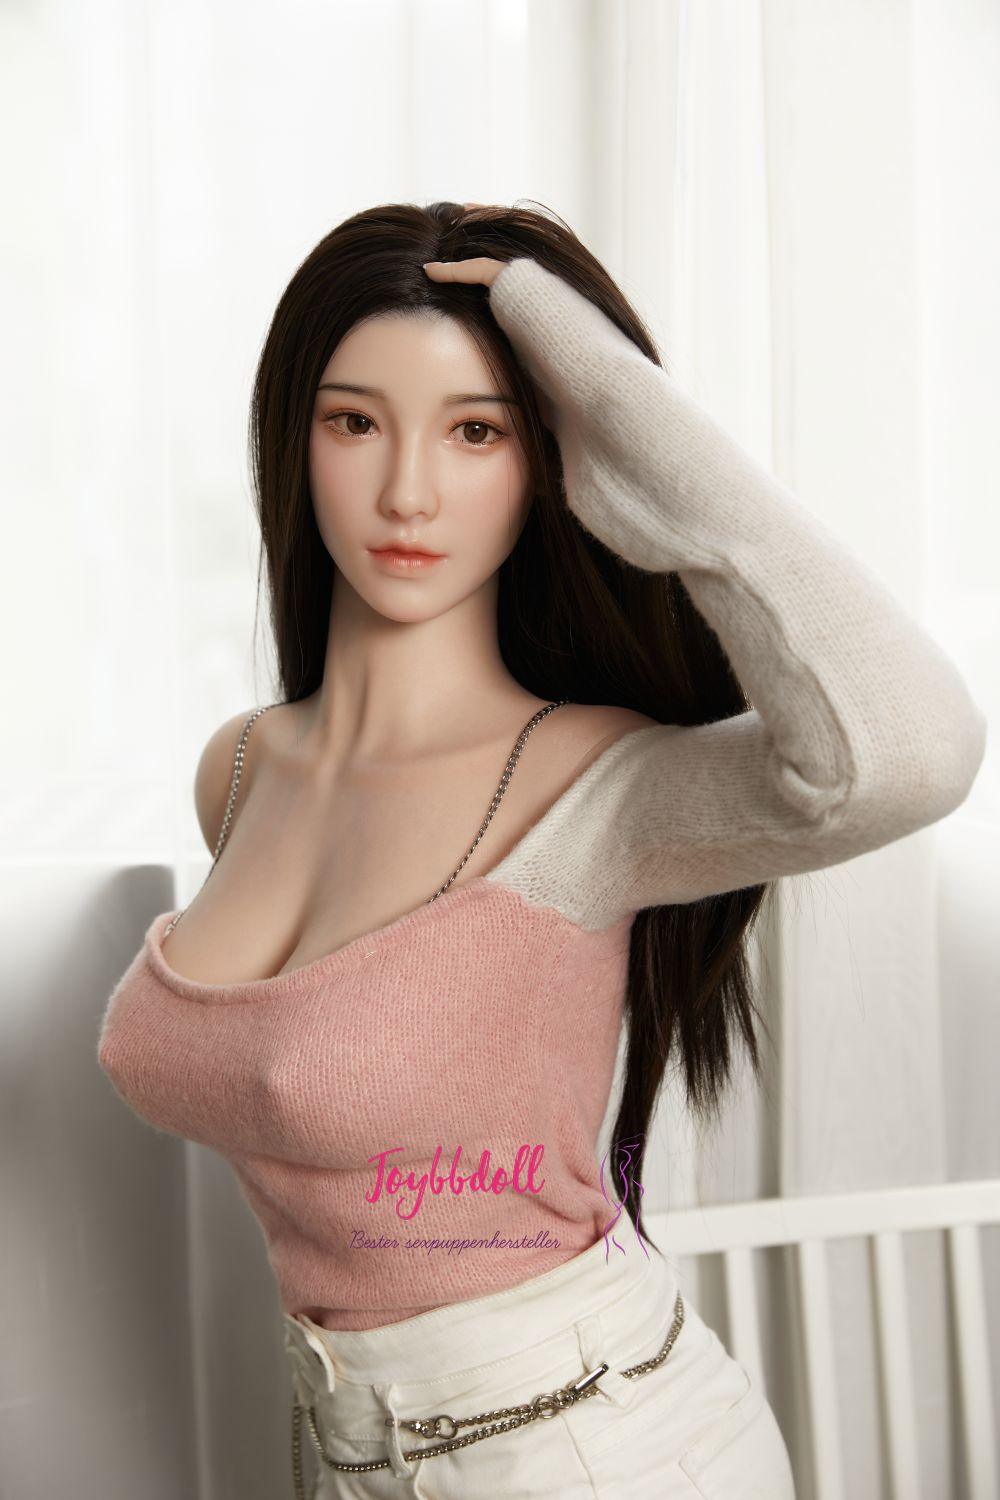 Qunta-Supermodel mit dem Goldenen Schnitt - Joybbdoll-CST Doll